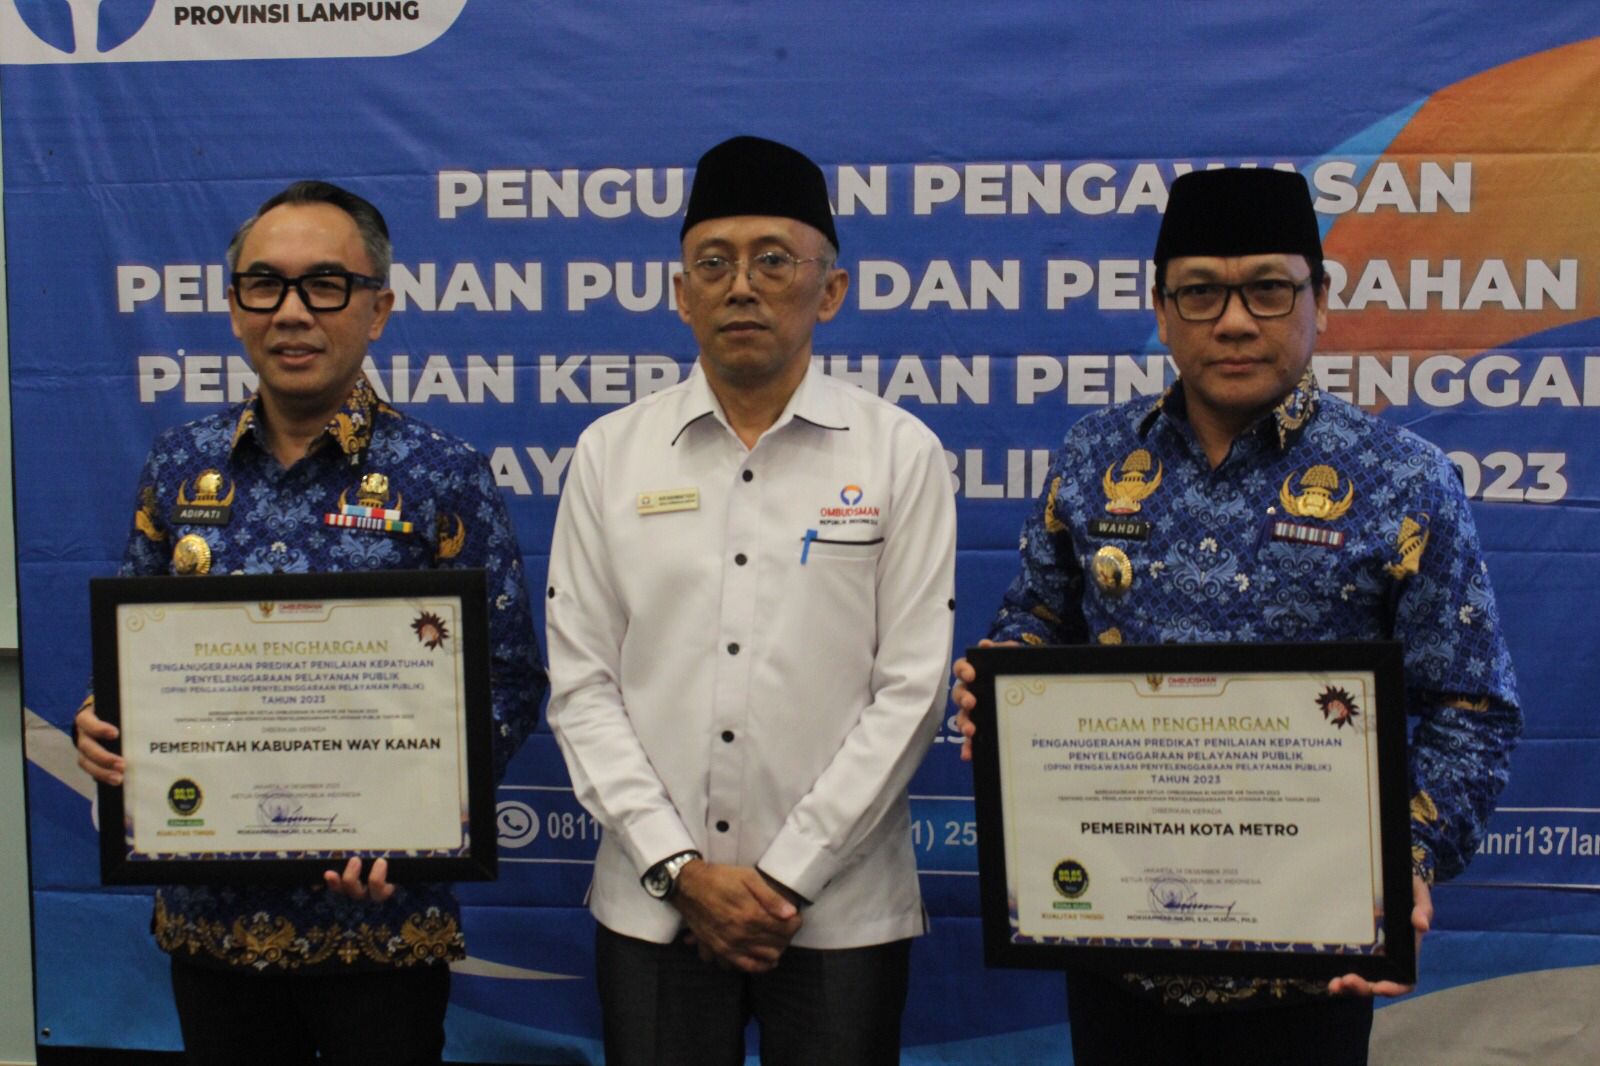 Refleksi Akhir Tahun, Ombudsman Lampung Adakan Penguatan Pelayanan Publik dan Expose Hasil Kepatuhan Pelayanan Publik di Provinsi Lampung